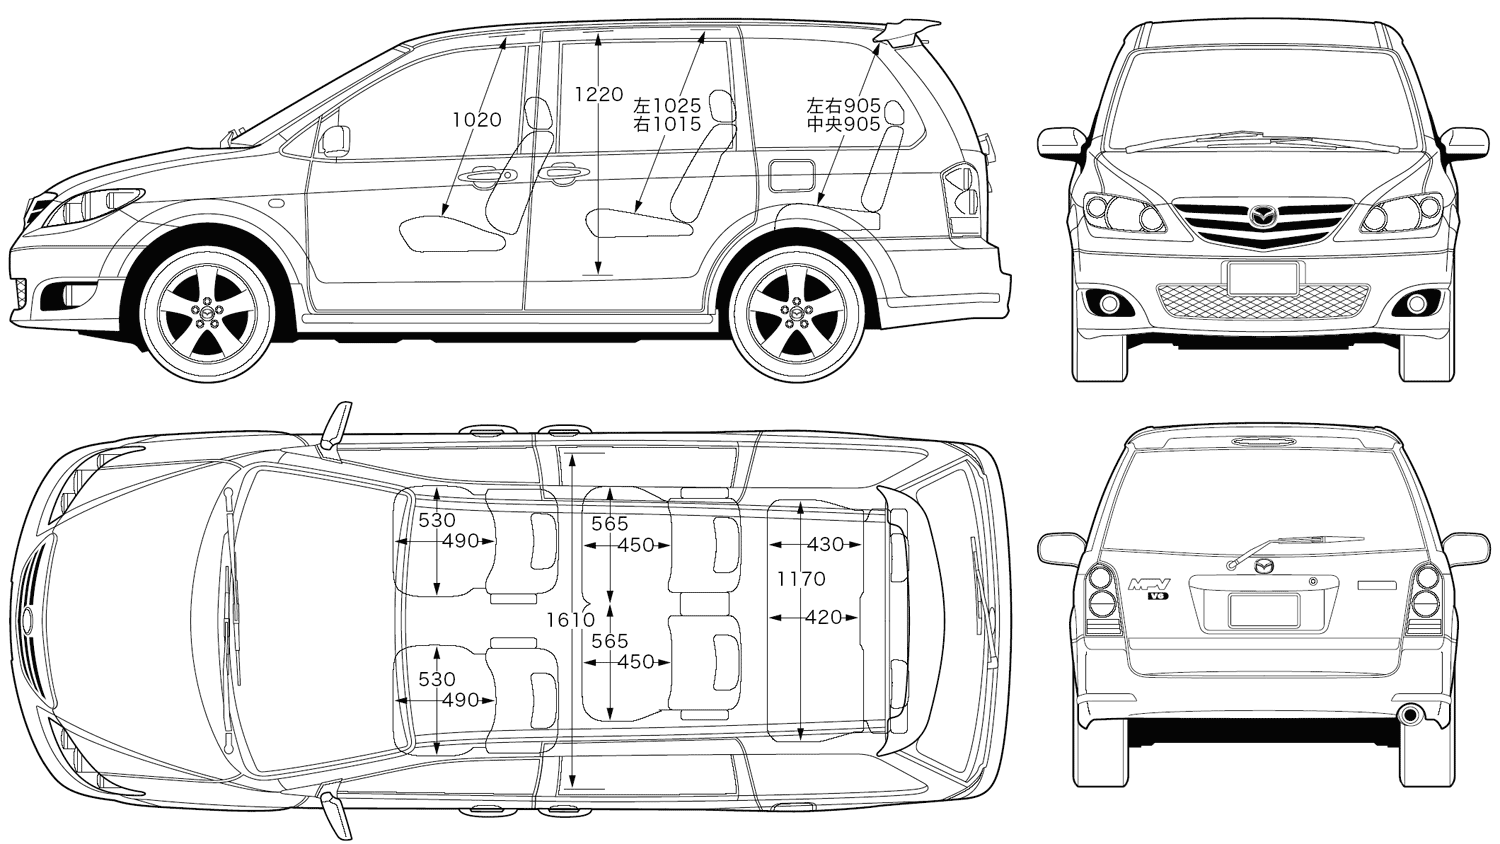 Mazda MPV - 4. Image file size: 314.58Kb Resolution: 1973 x 1239